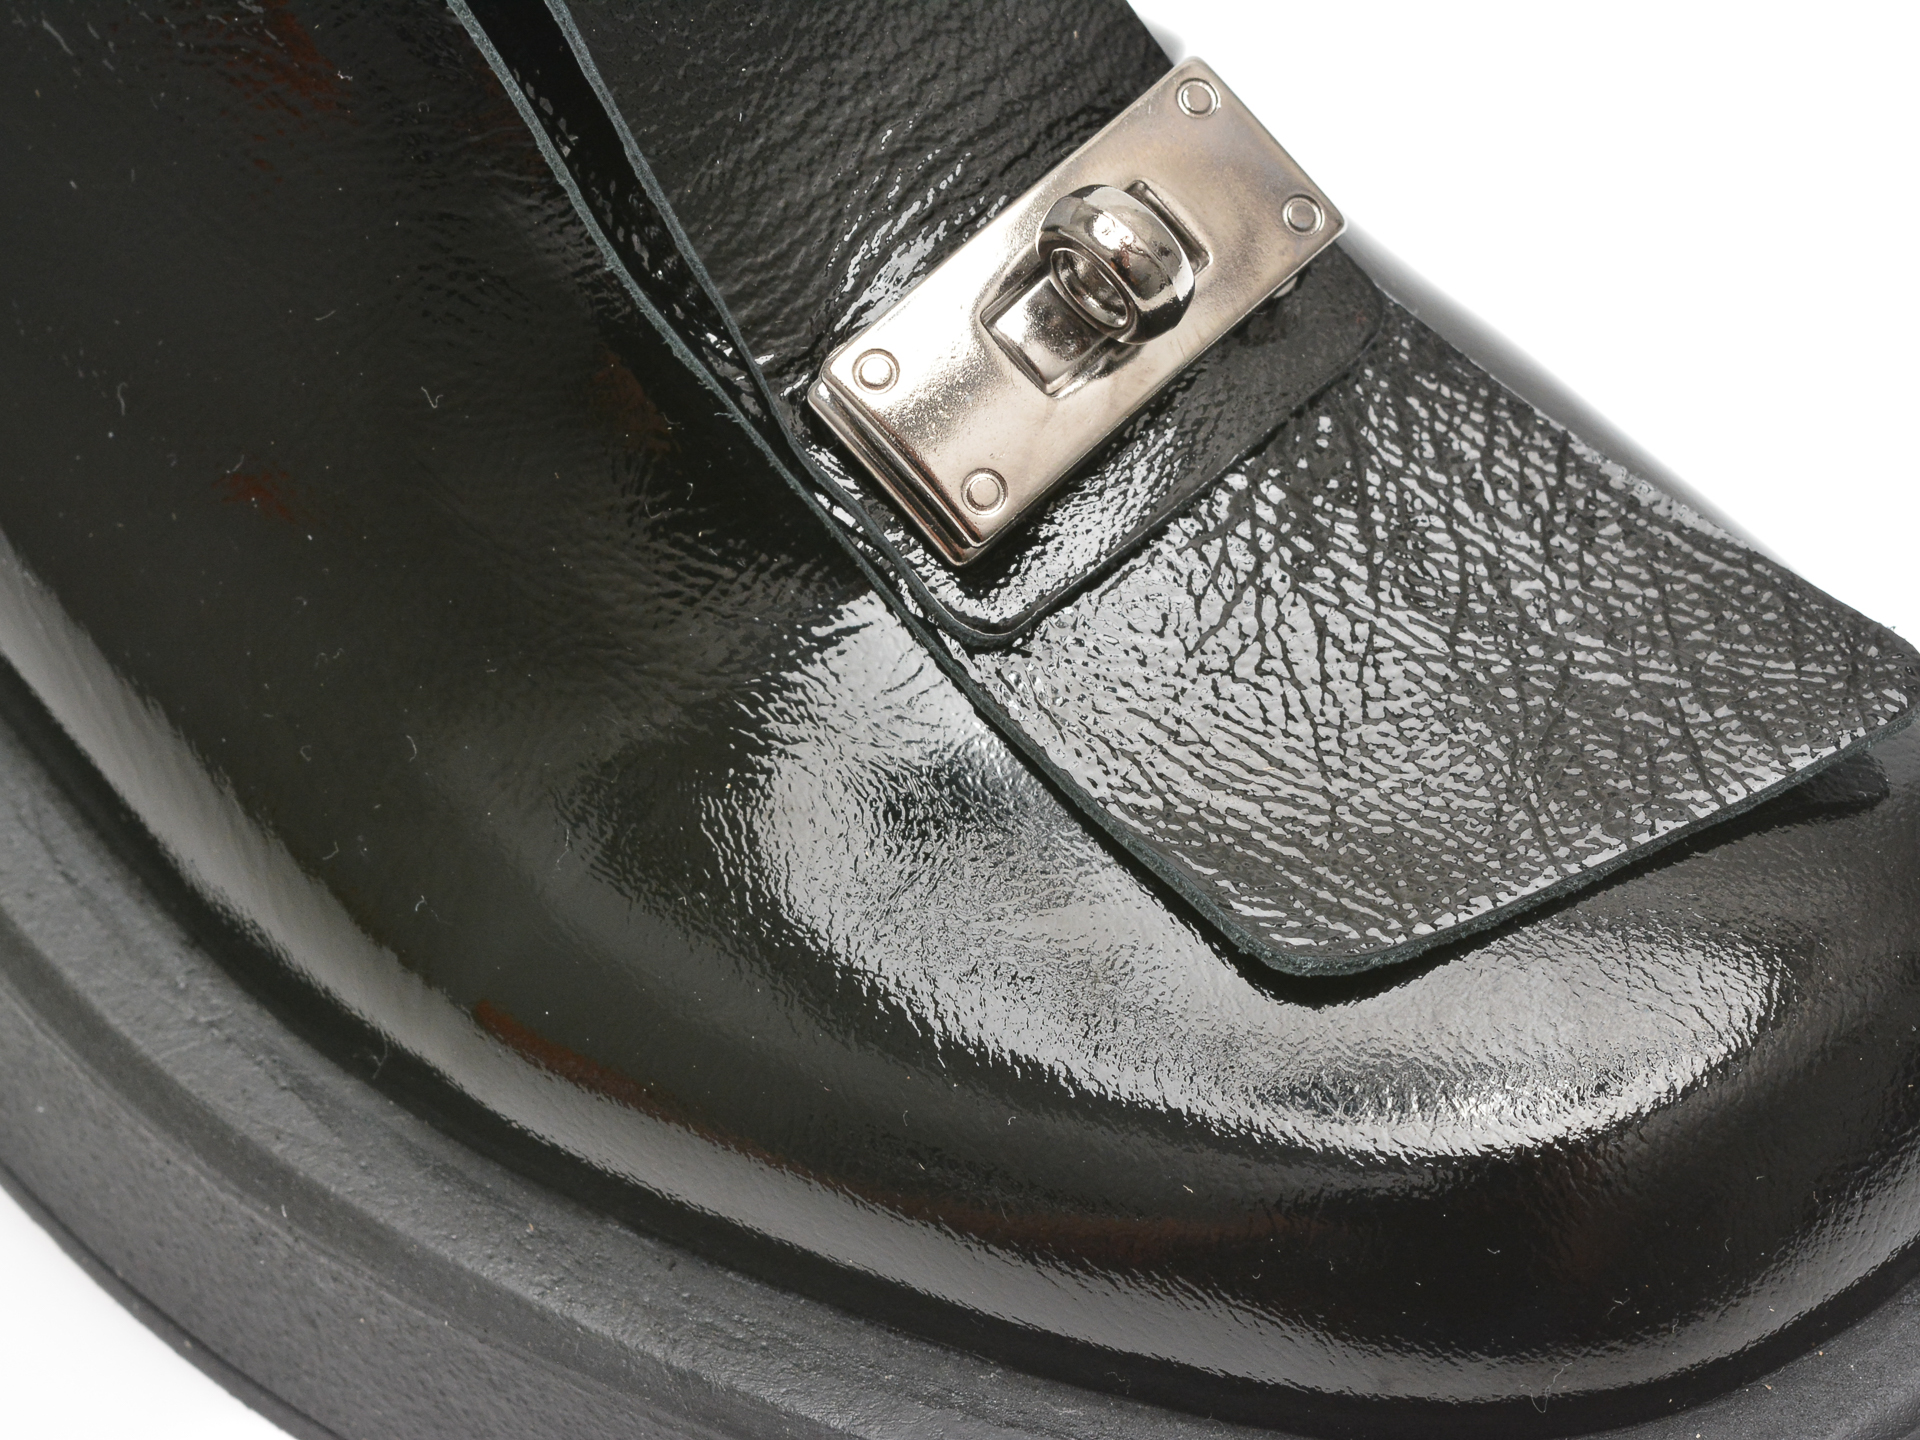 Poze Pantofi EPICA negri, 484198, din piele naturala lacuita